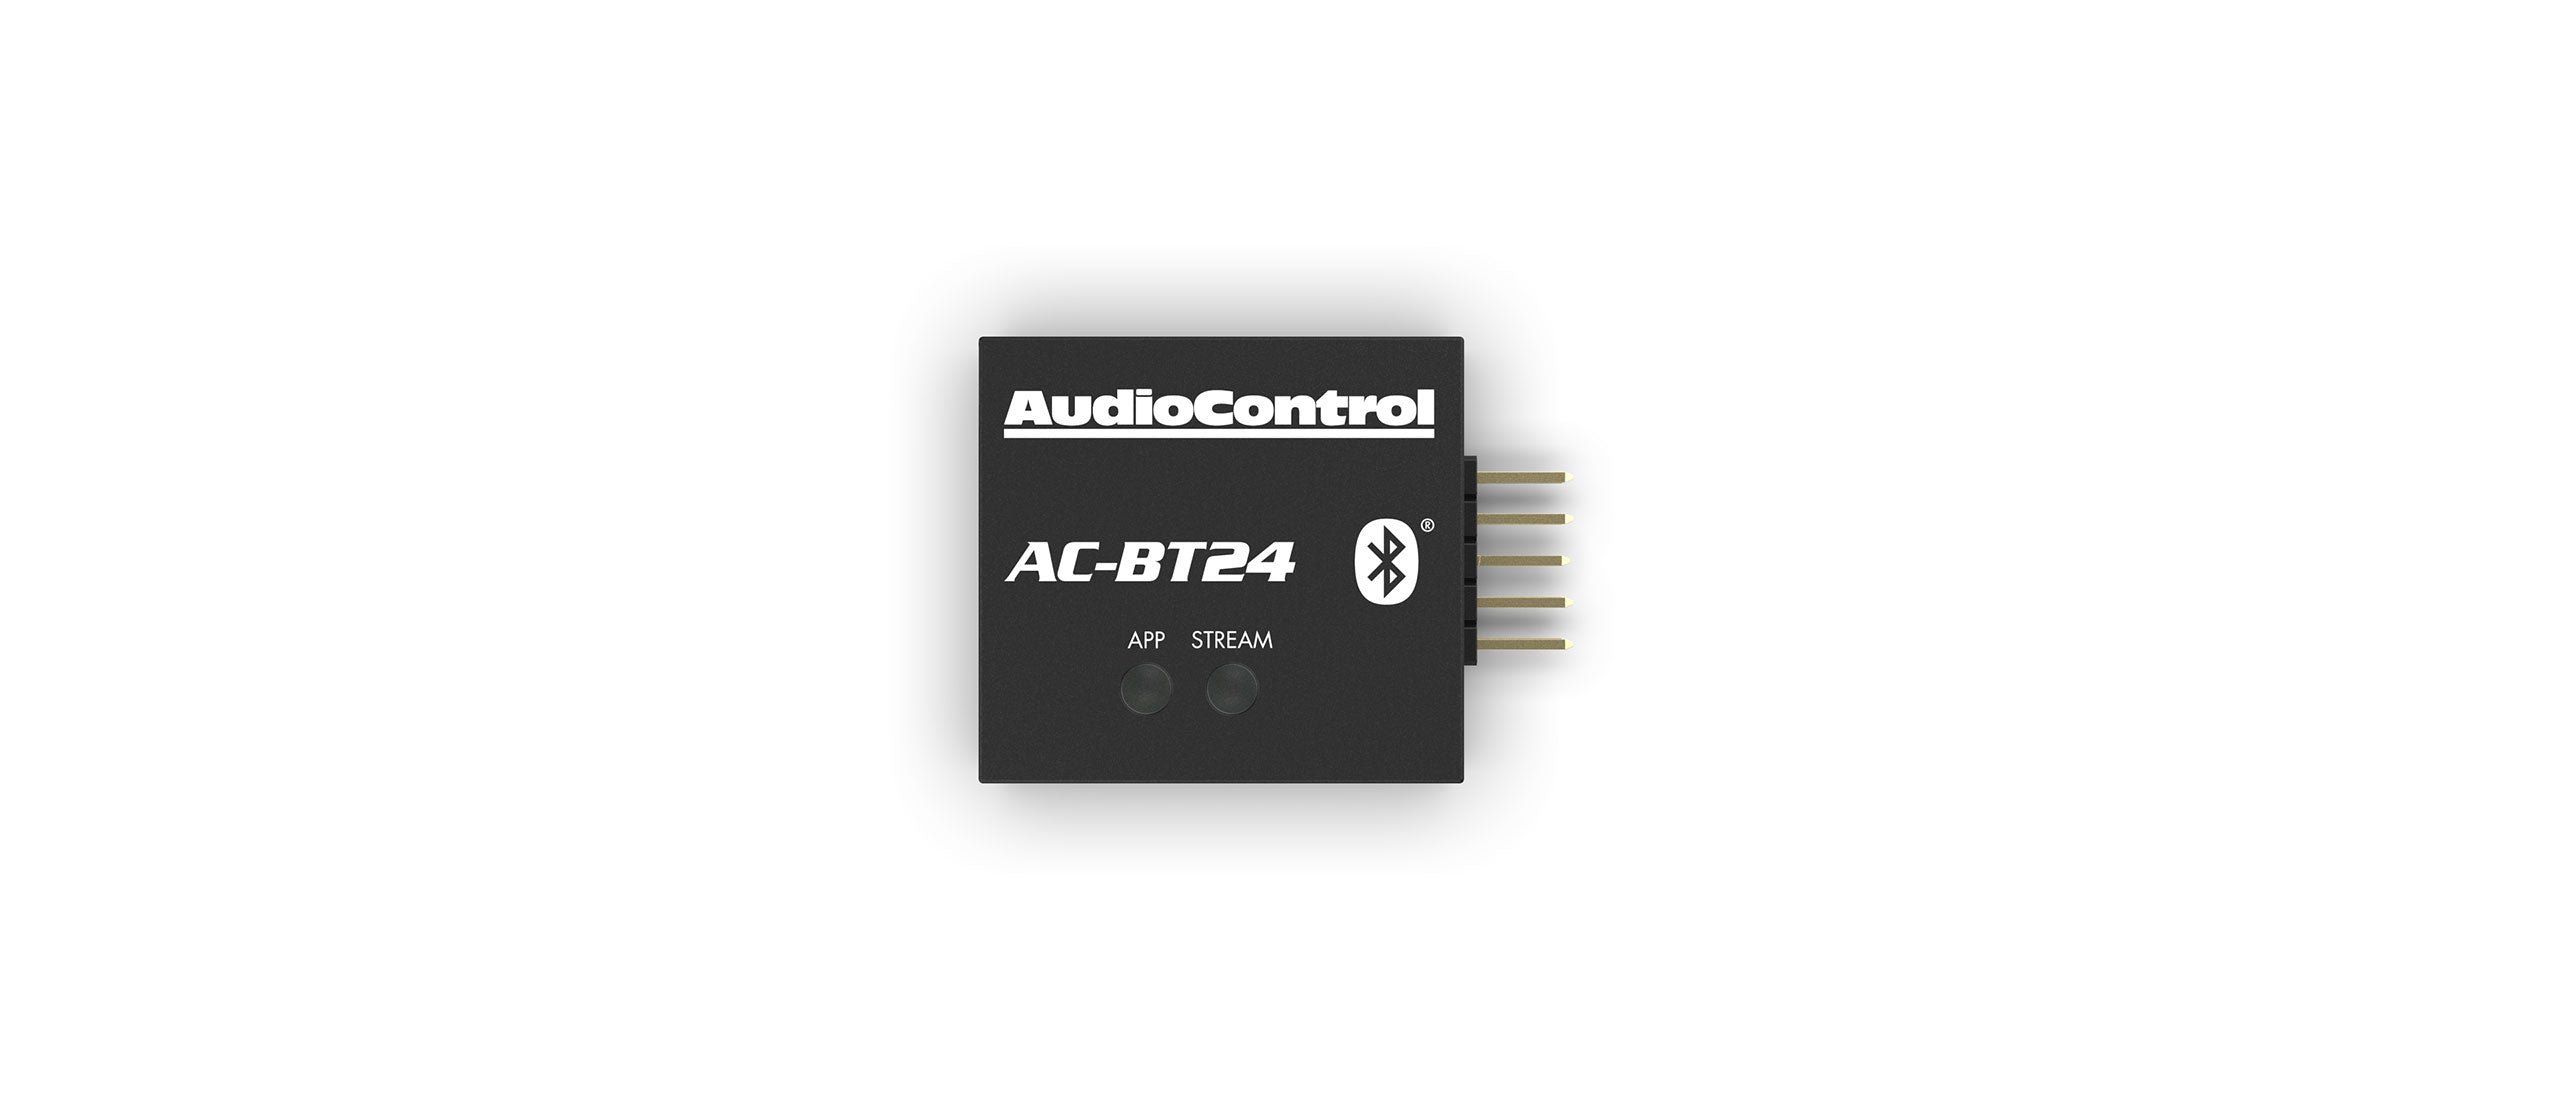 Audio Control AC-BT24